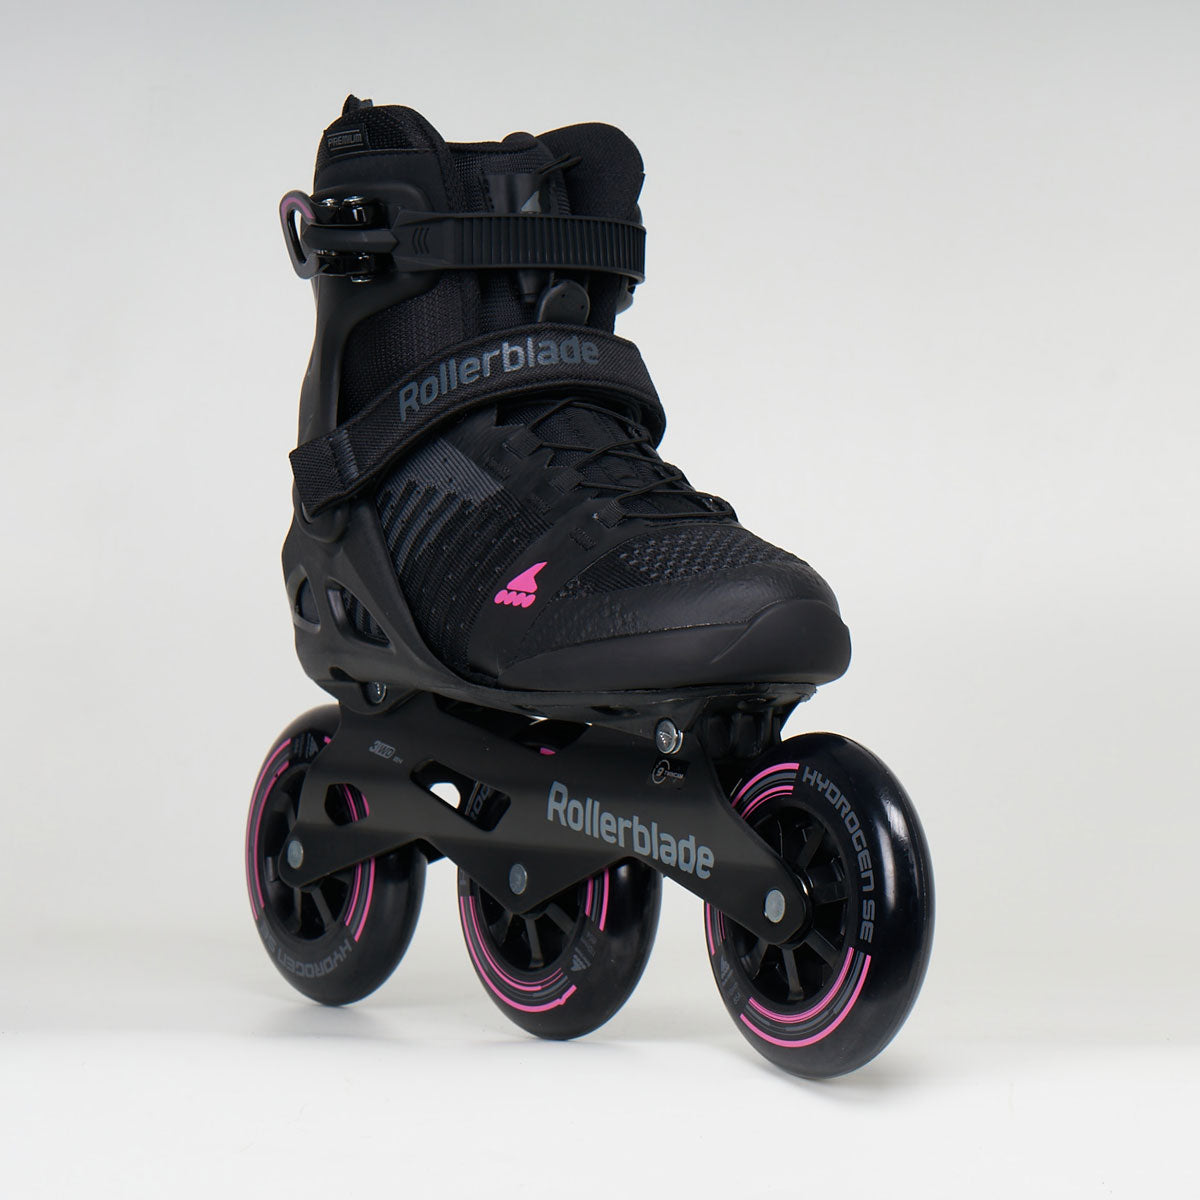 Rollerblade Macroblade W 110 3WD Womens Skates - Black/Hot Pink